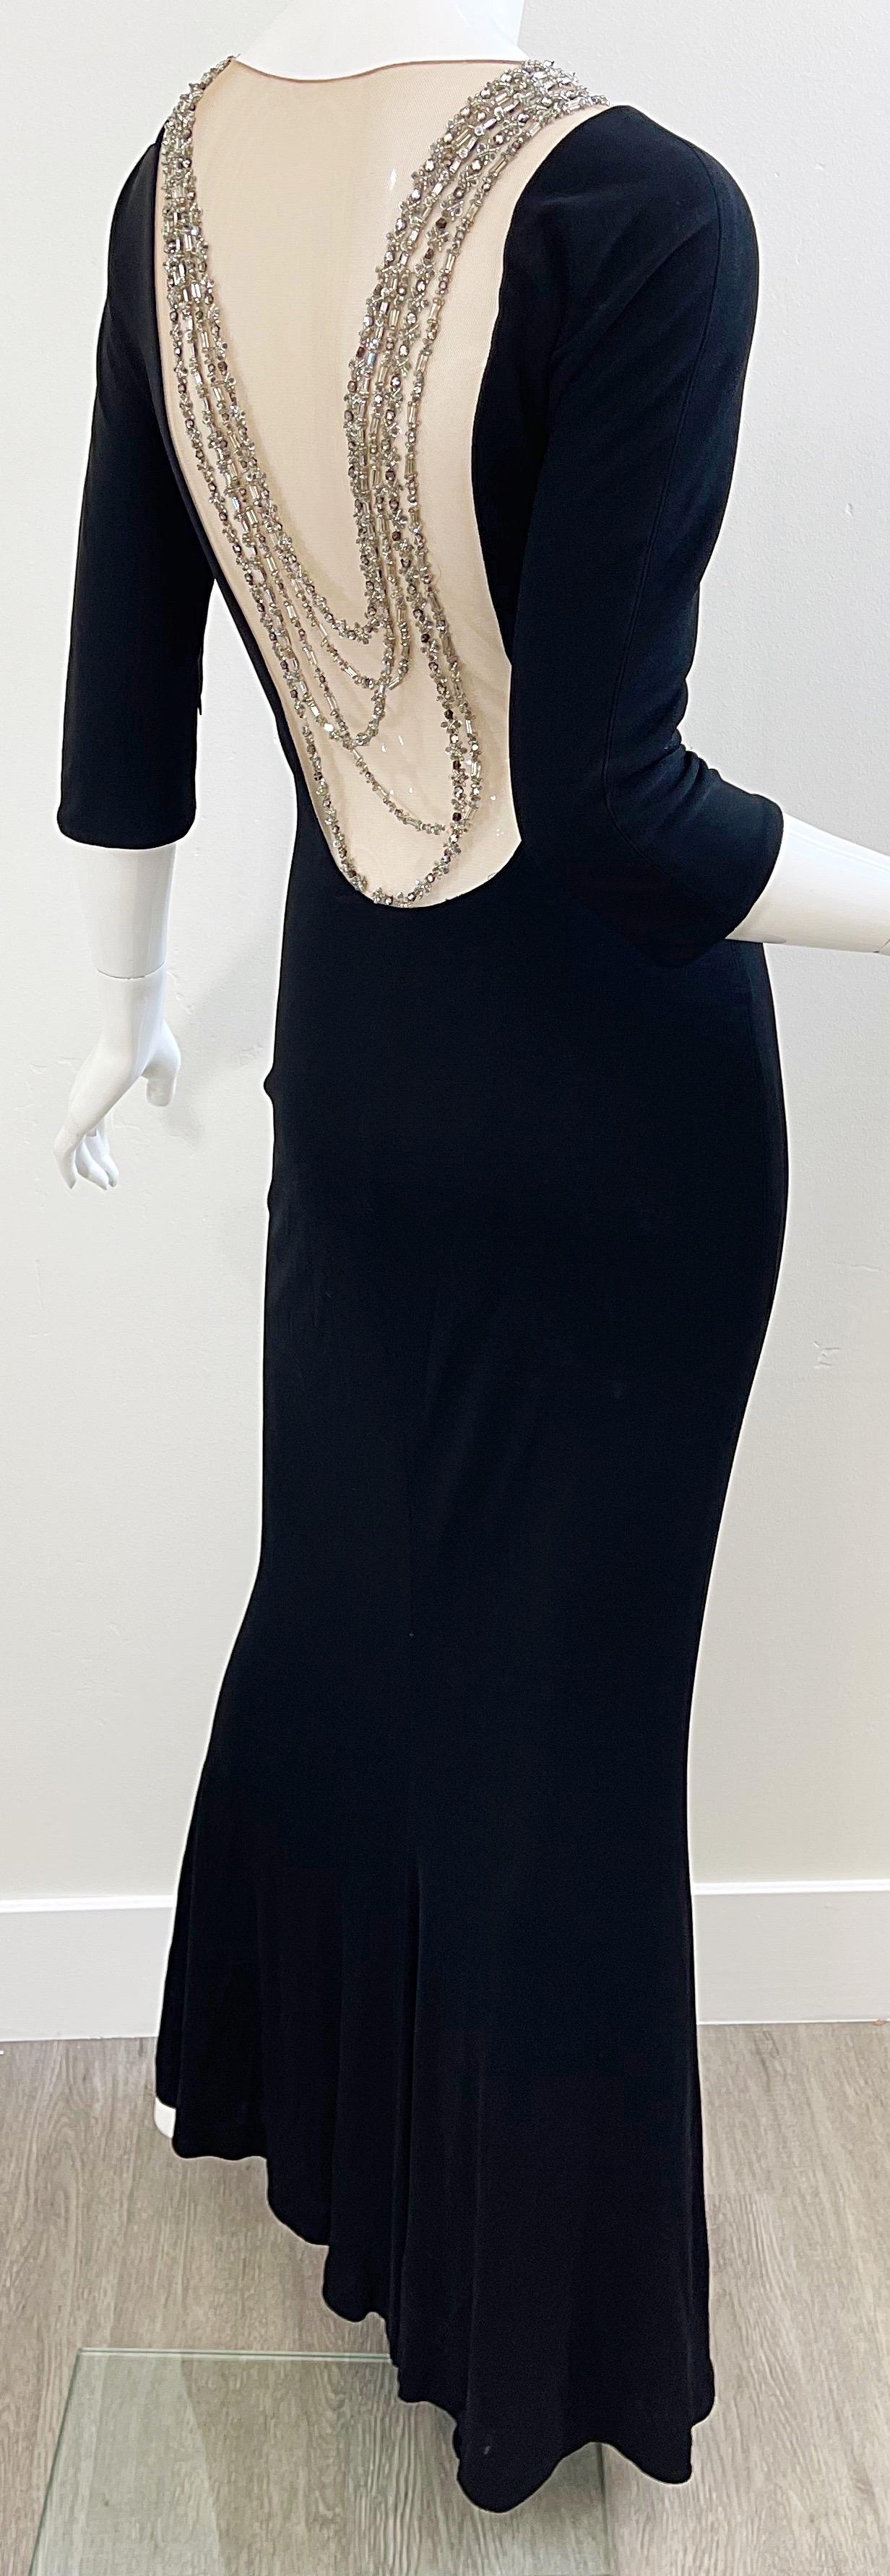 Randolph Duke 1990s Size 8 Black Jeweled Rhinestone Vintage 90s Gown Dress For Sale 5